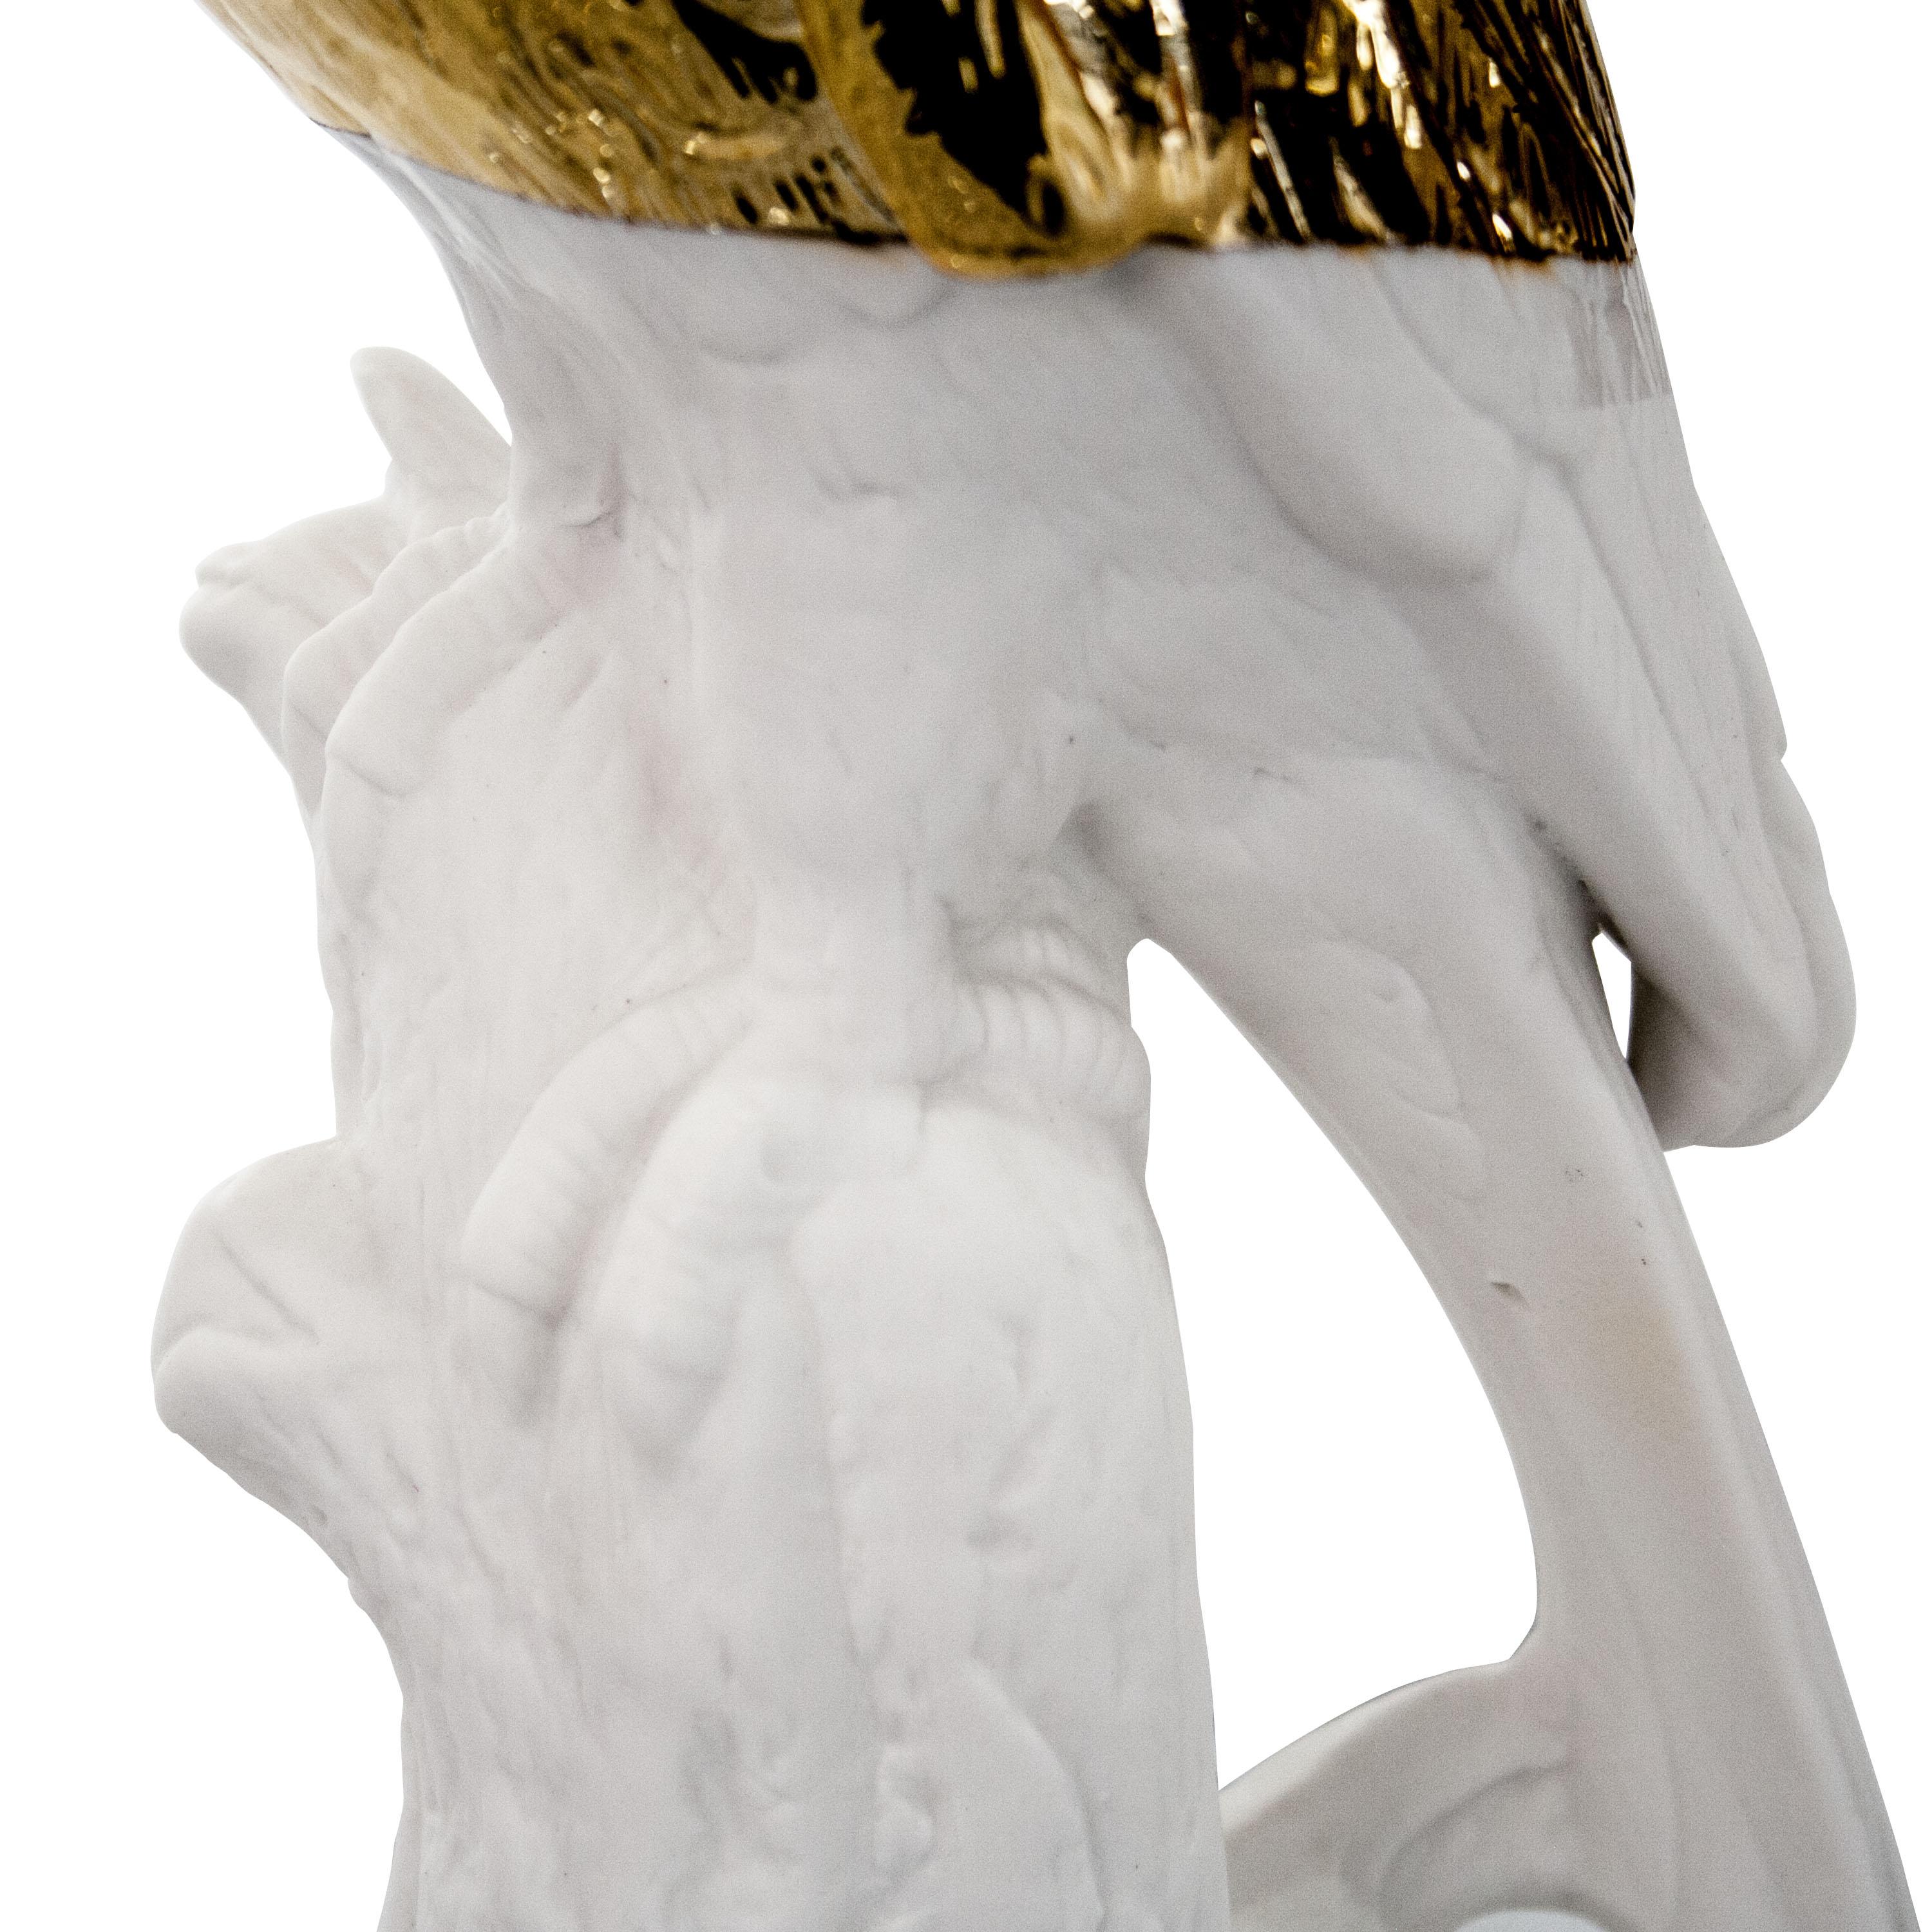 Dutch Contemporary Ceramic Gold White Parrot Decoration Figure, Netherlands, 2020 For Sale